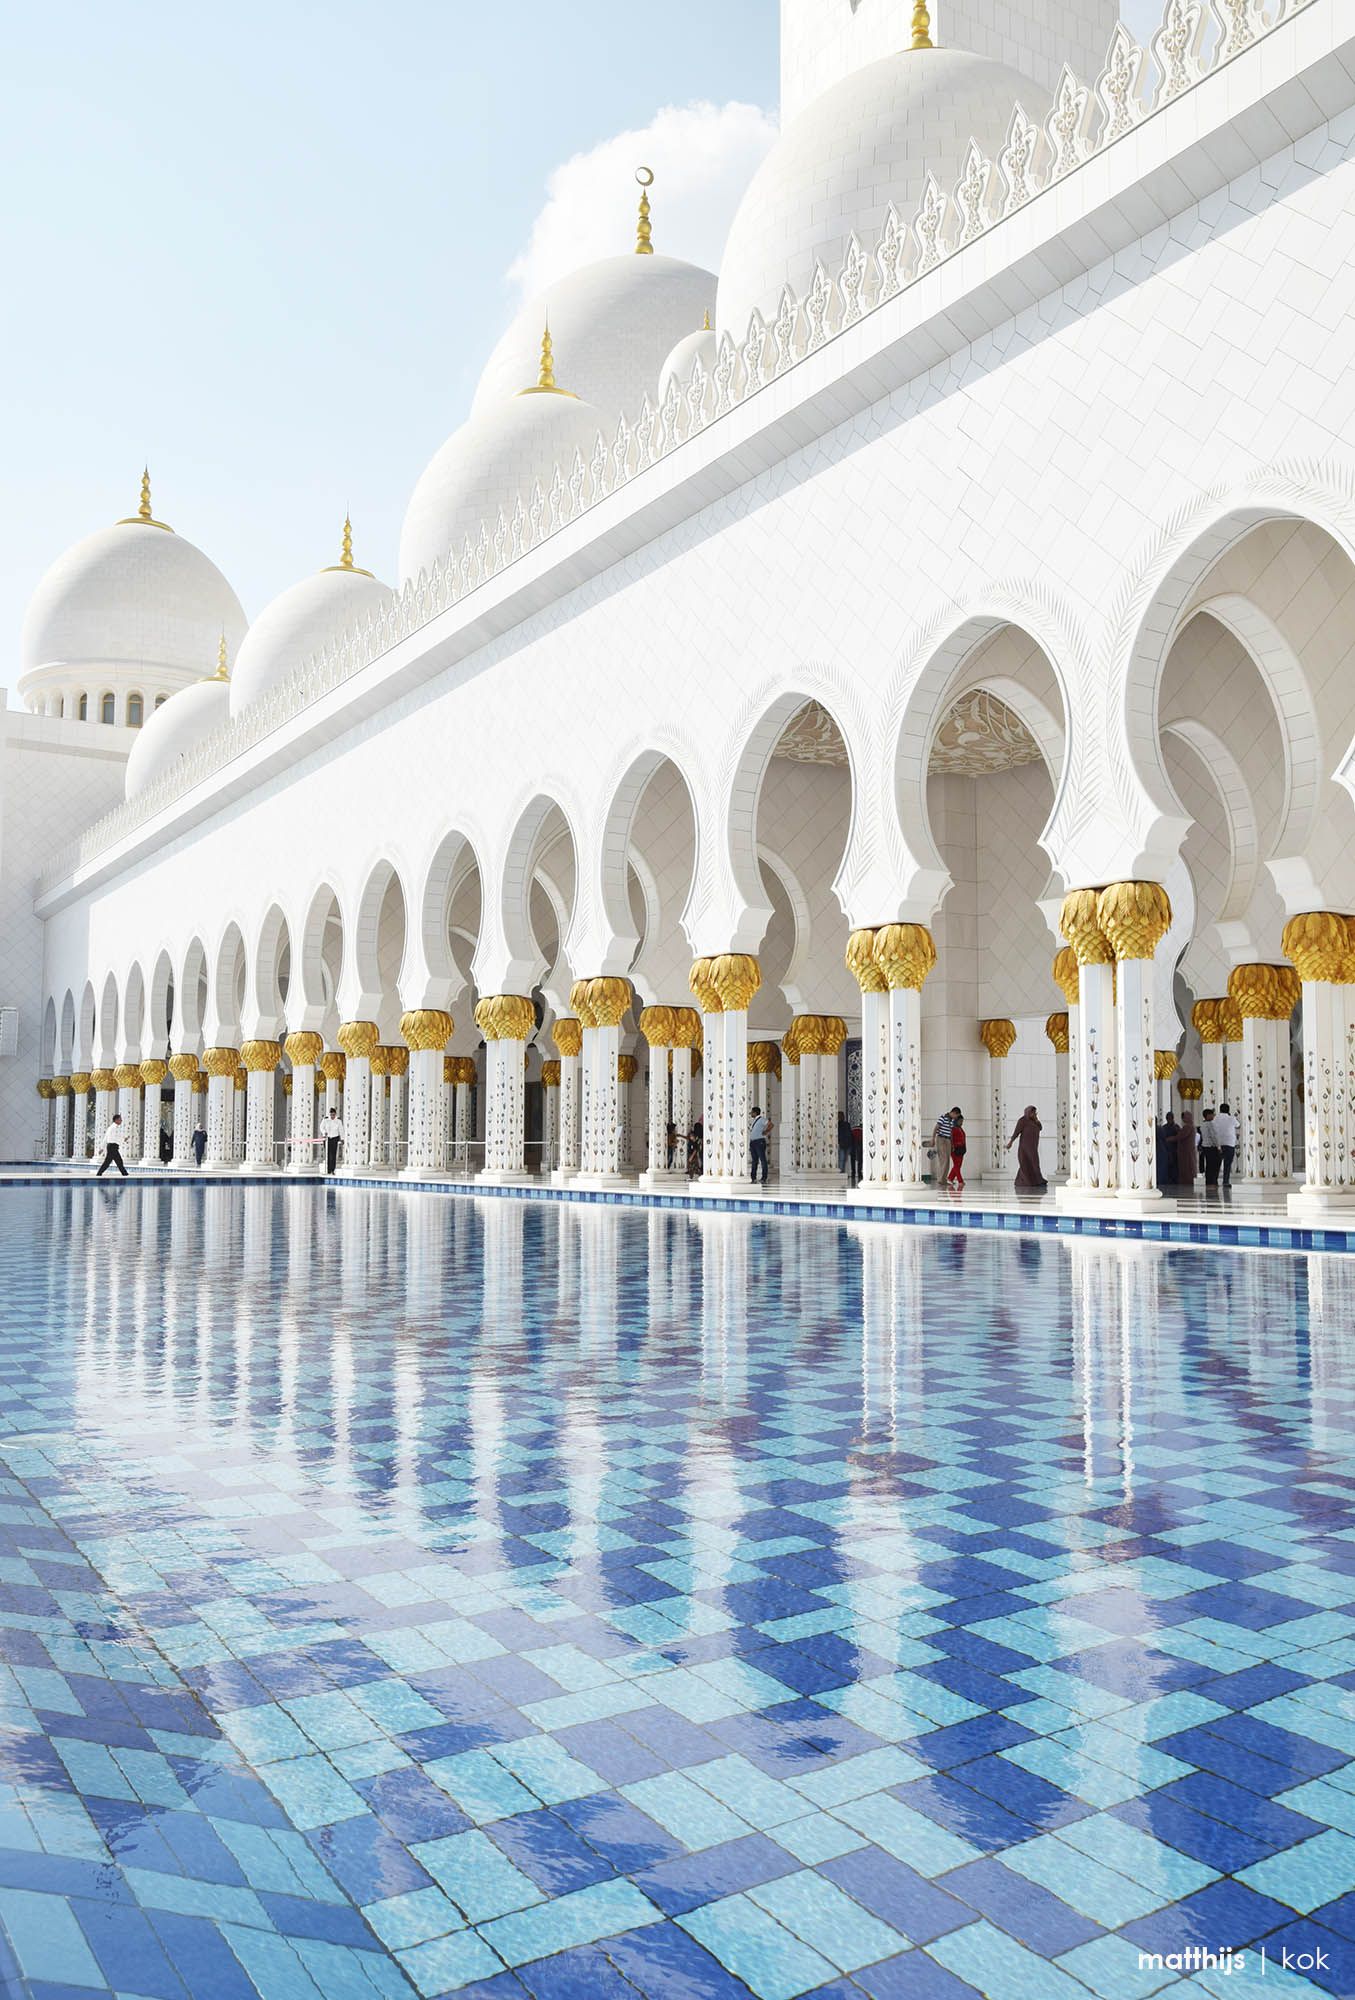 Sheikh Zayed Grand Mosque, Abu Dhabi, UAE | Photo by Matthijs Kok